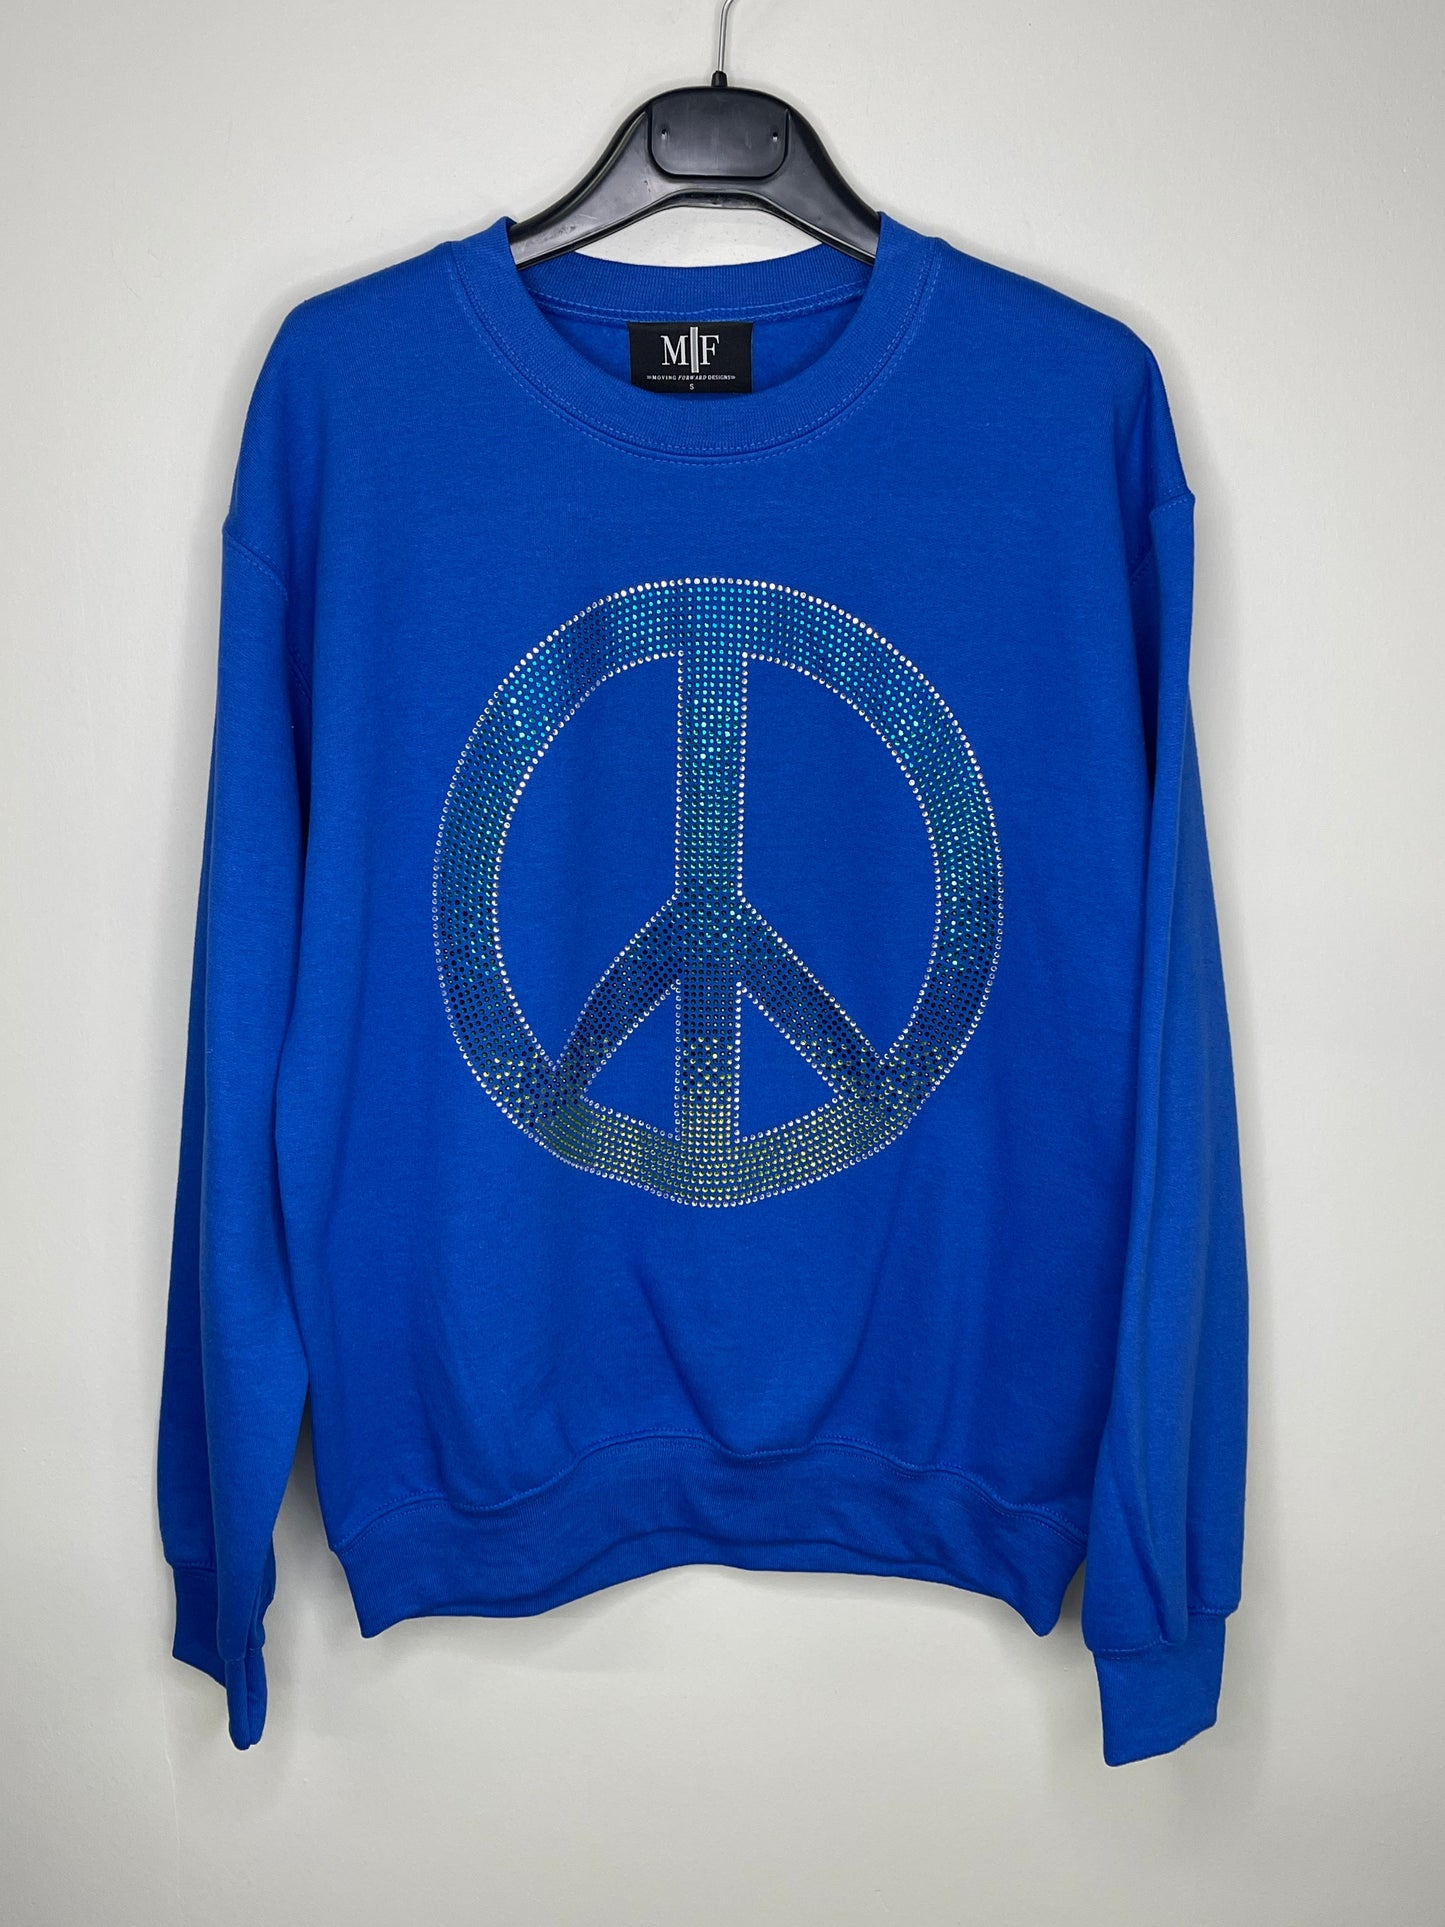 Sweatshirt, Crewneck Royal Blue, Peace Sign